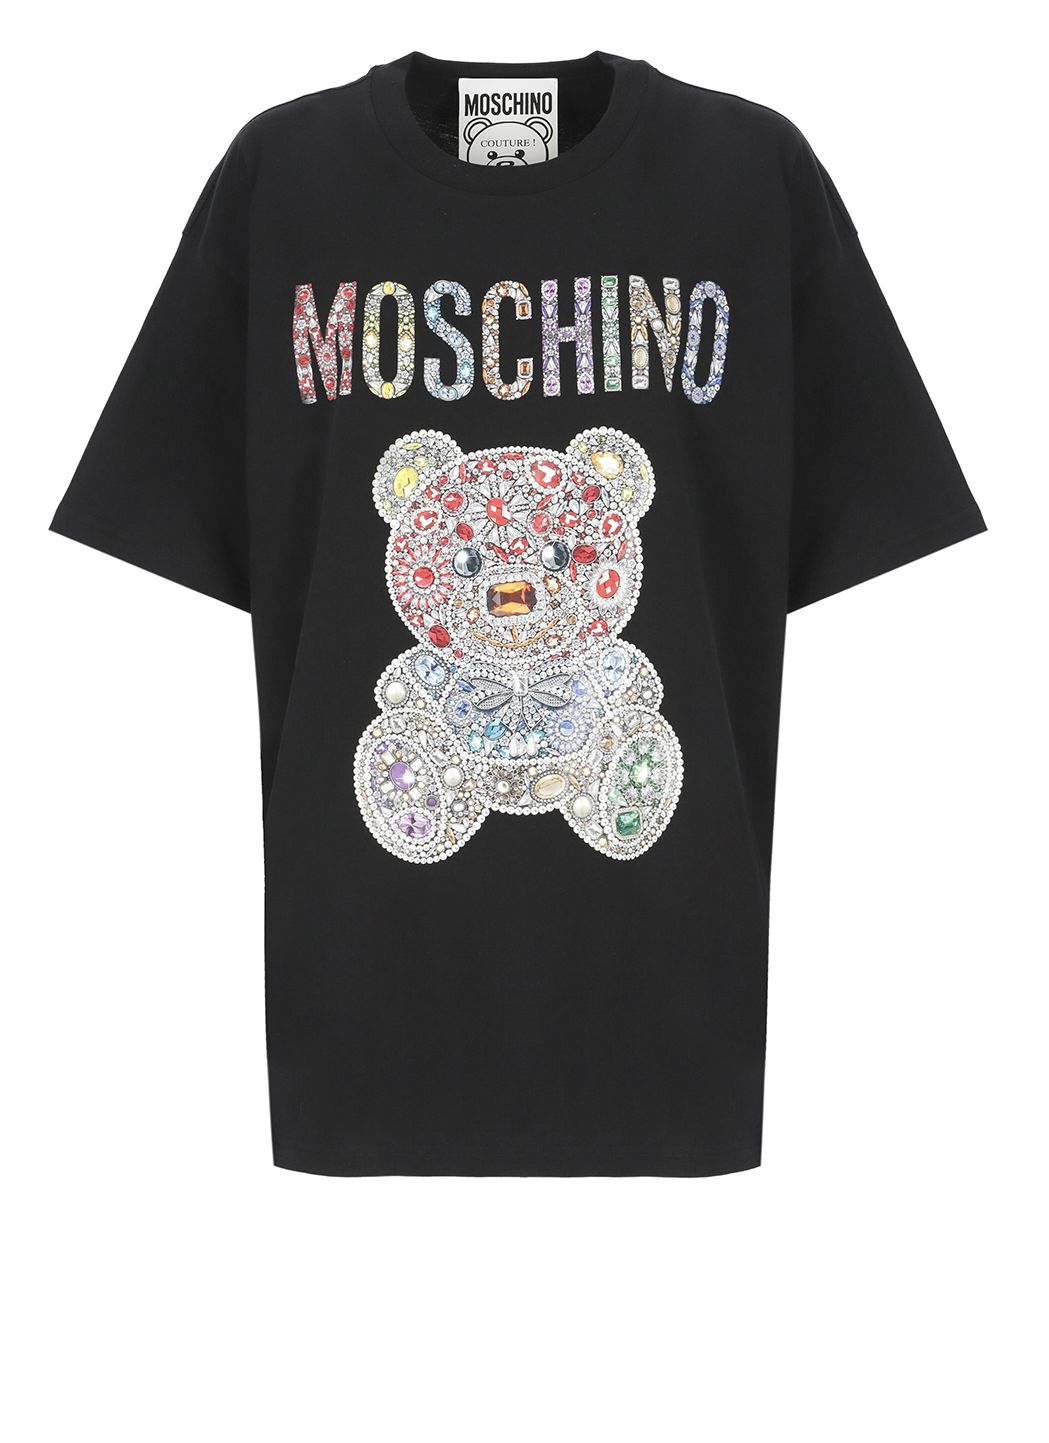 Moschino T-shirt Teddy Bear - White